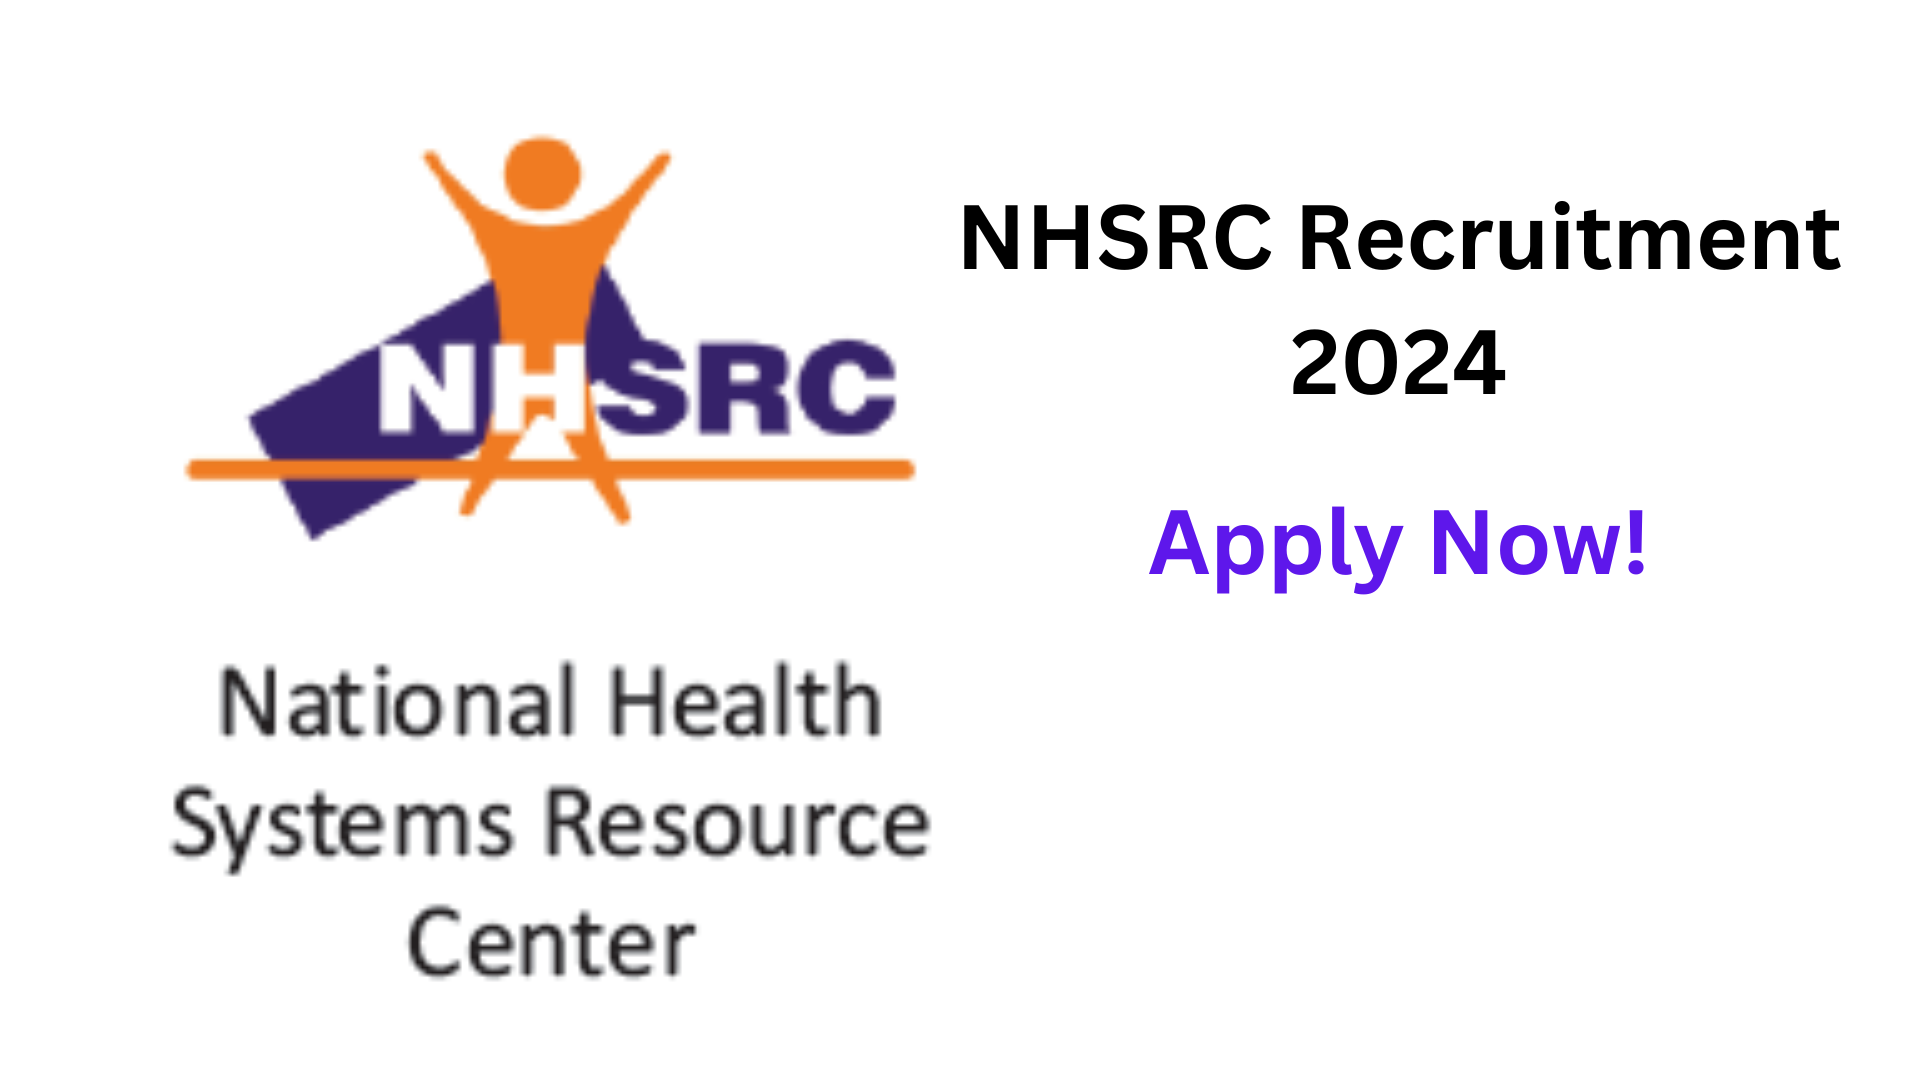 NHSRC Recruitment 2024